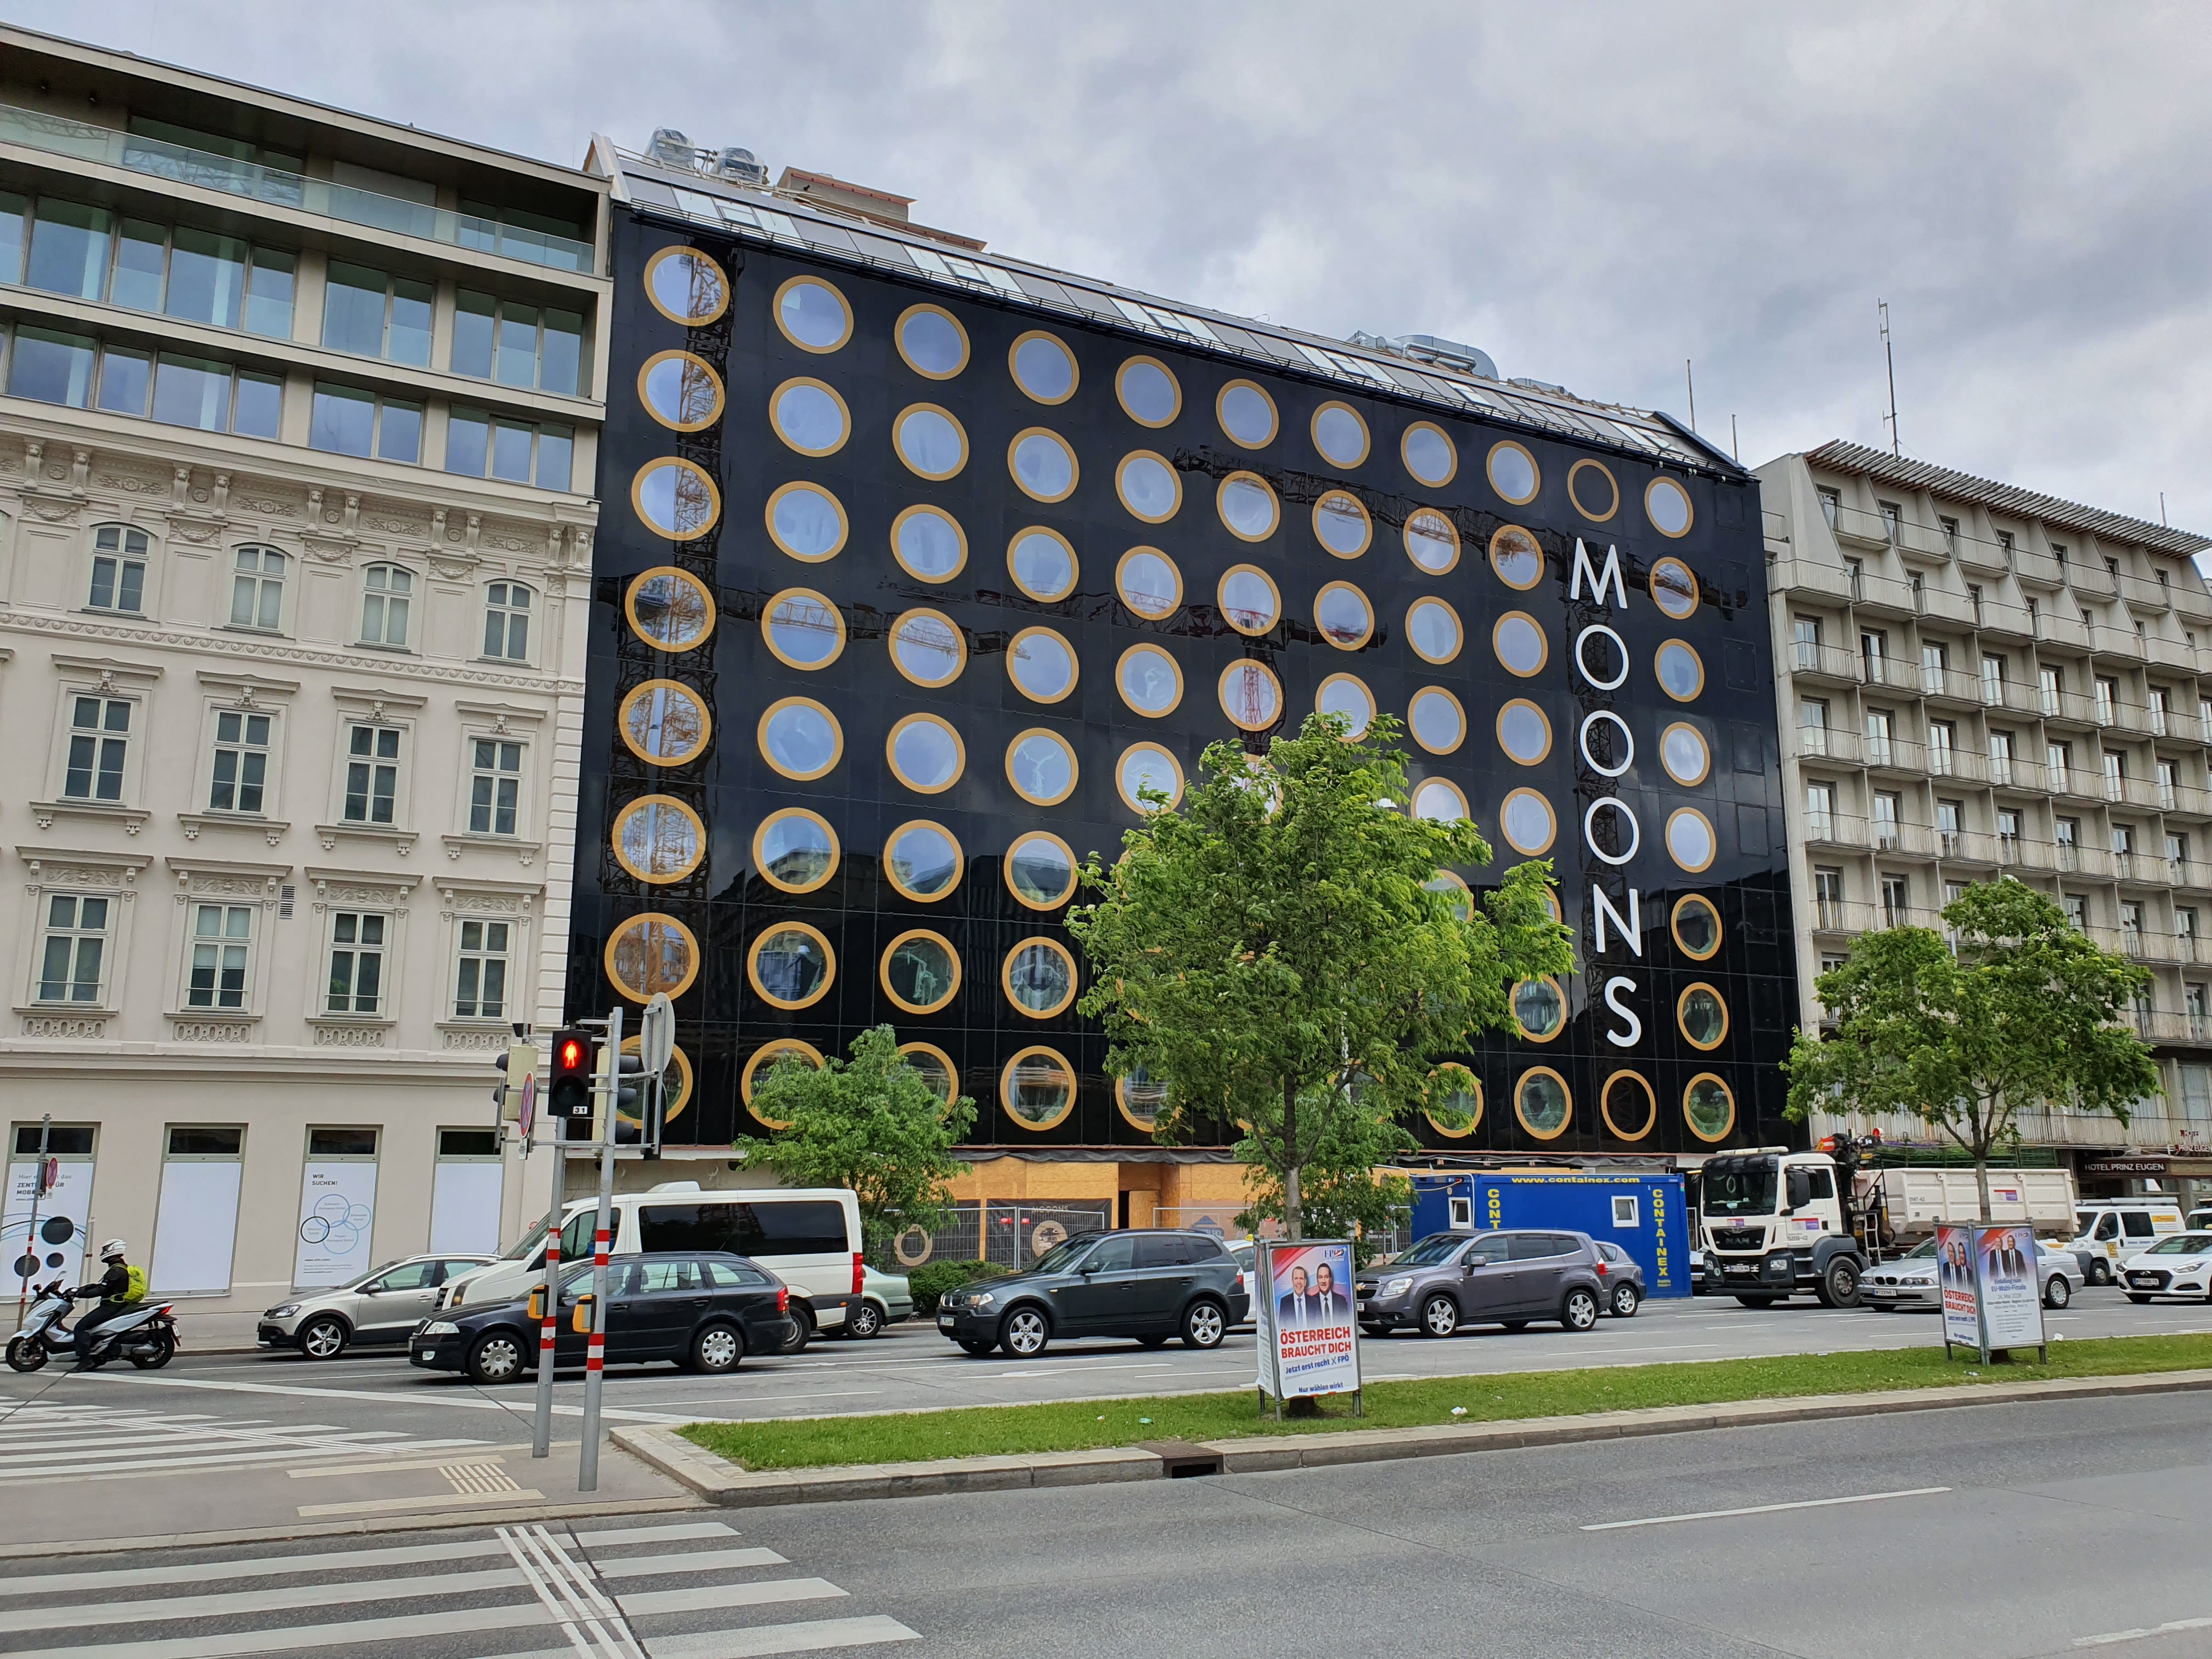 Hotel Mooons Wiedner Gürtel 16, 1040 Wien - Budownictwo lądowe naziemne